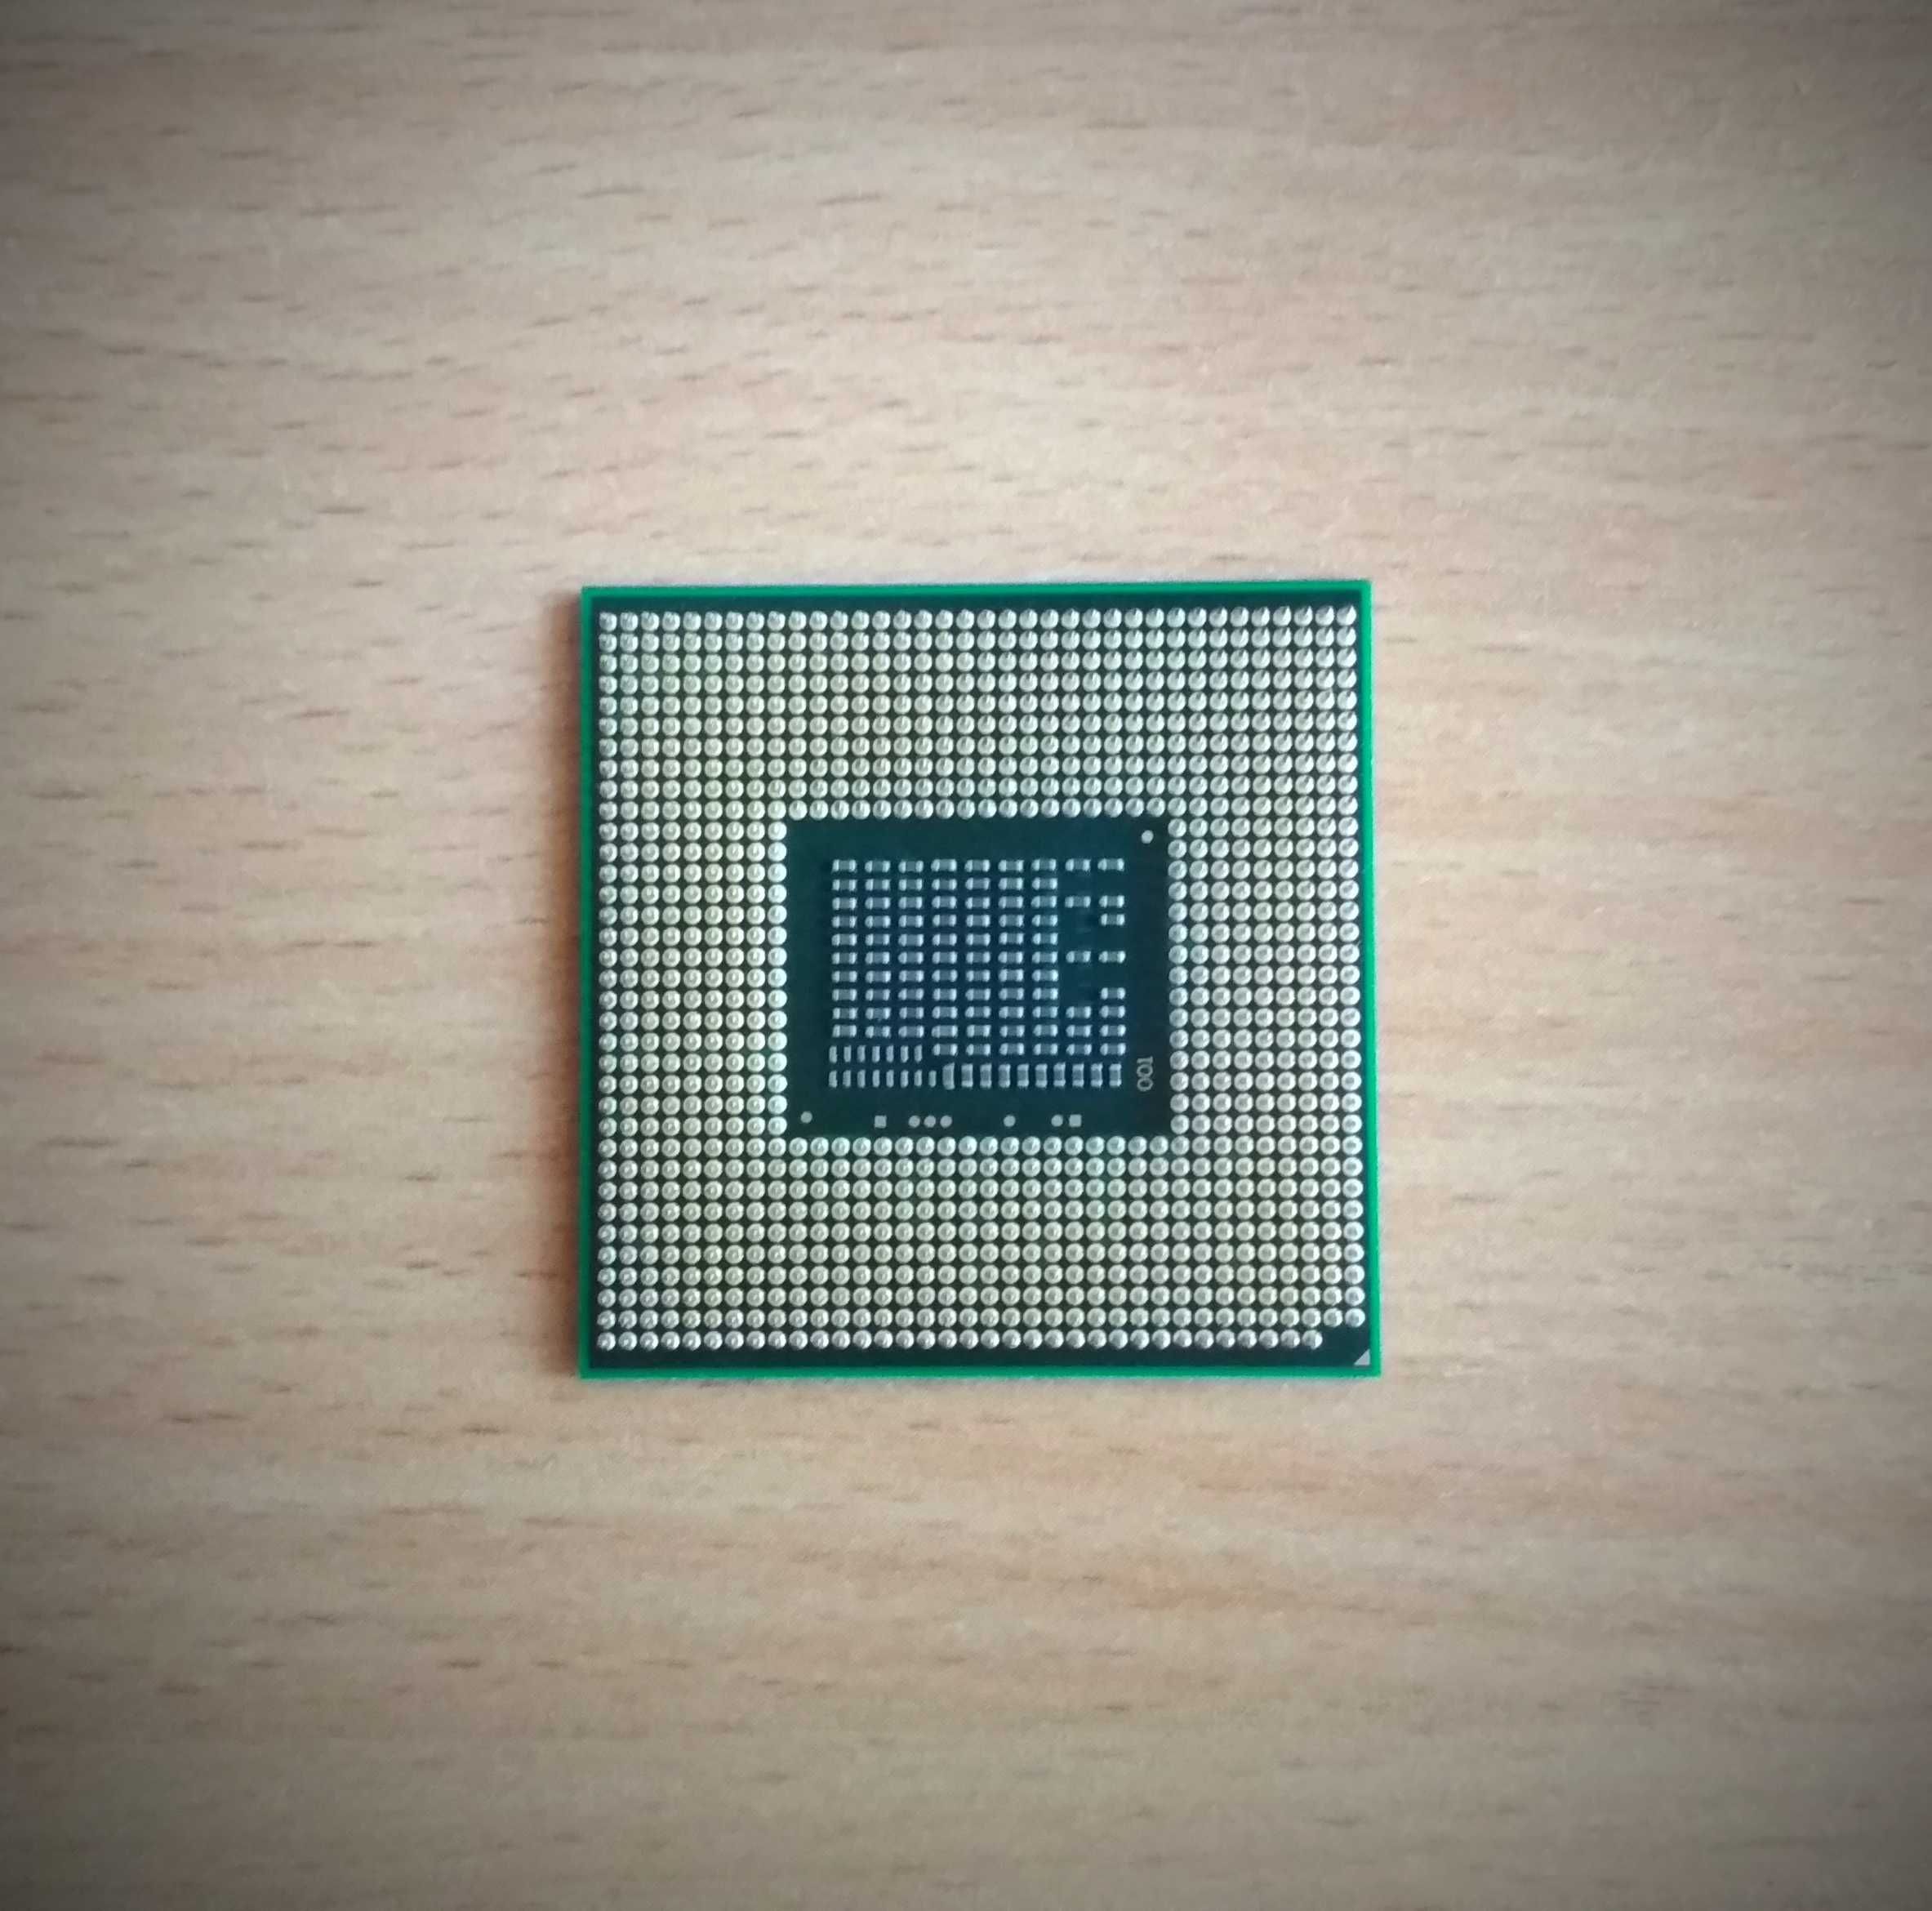 Процессоры Core T7350-Celeron B800-Pentium B940